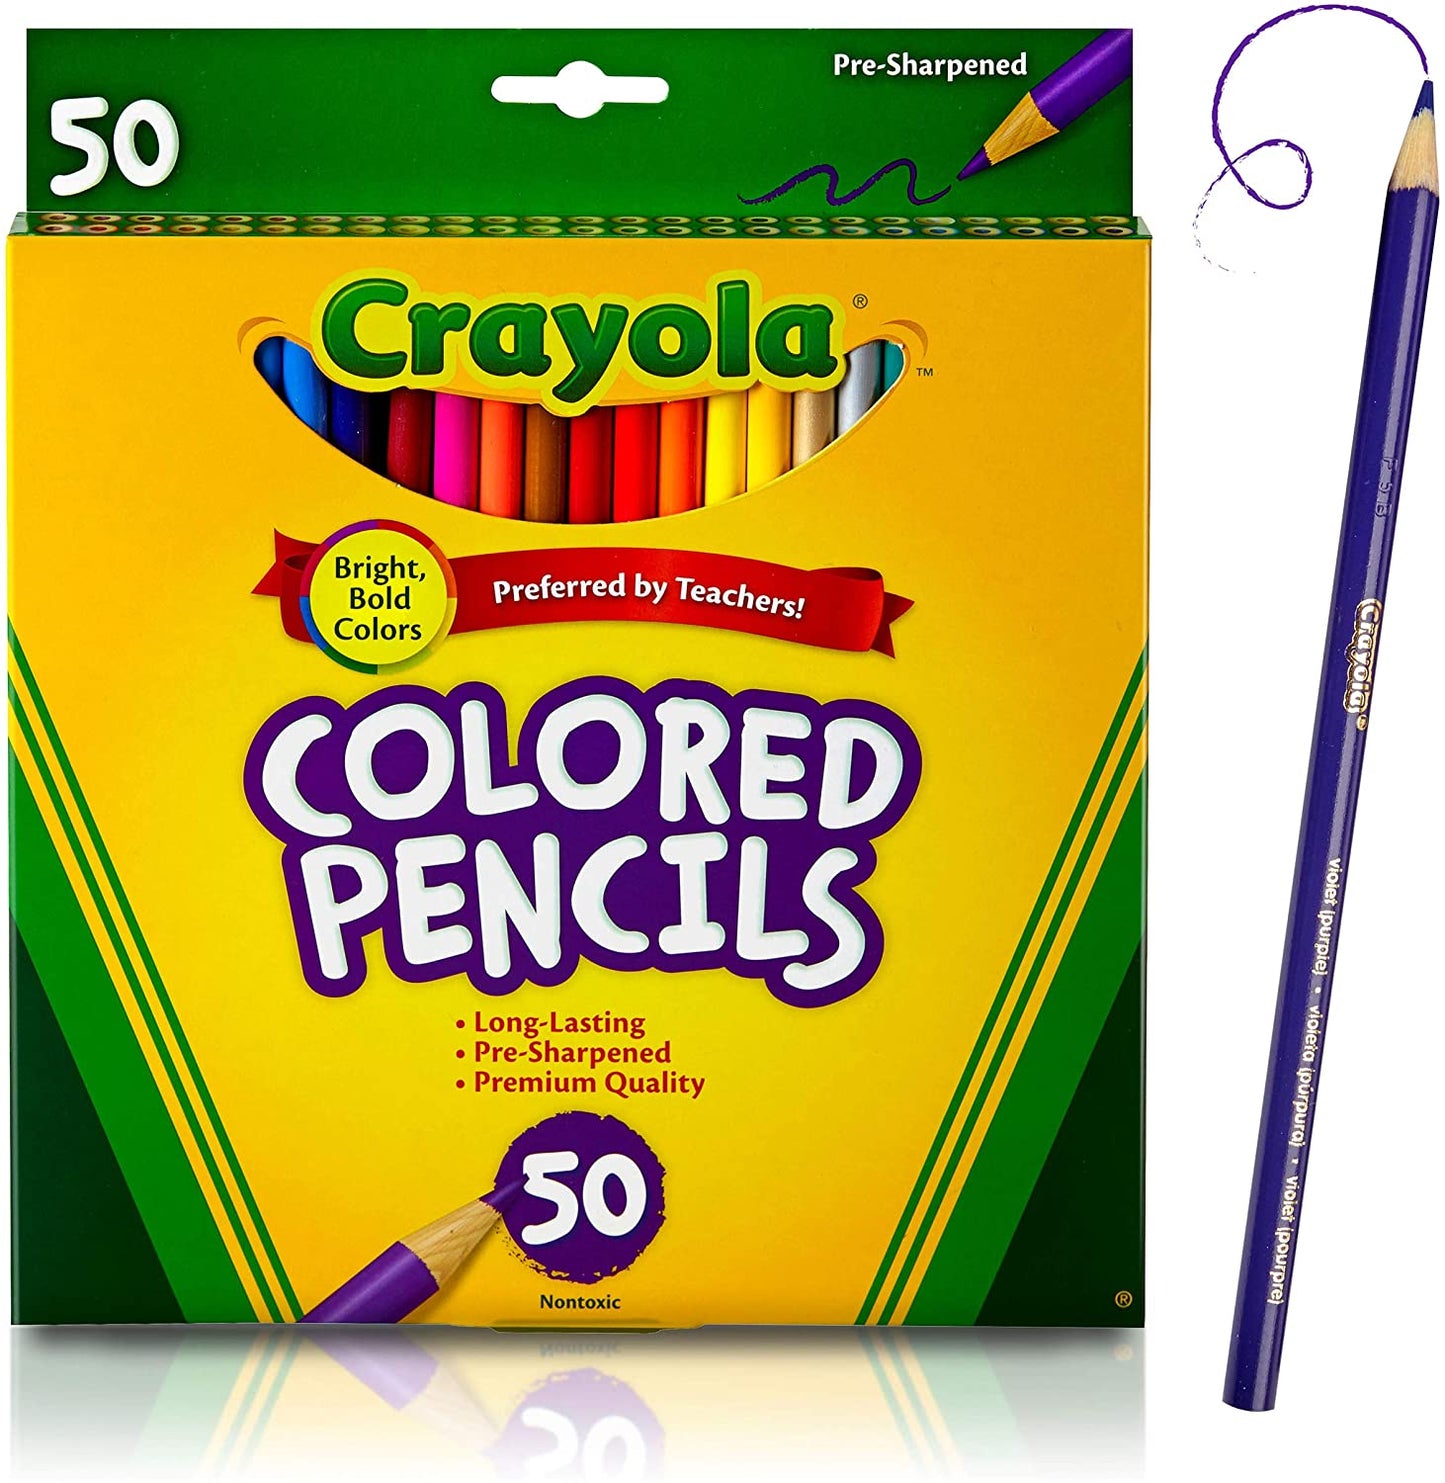 Crayola brand colored pencils, 50 units